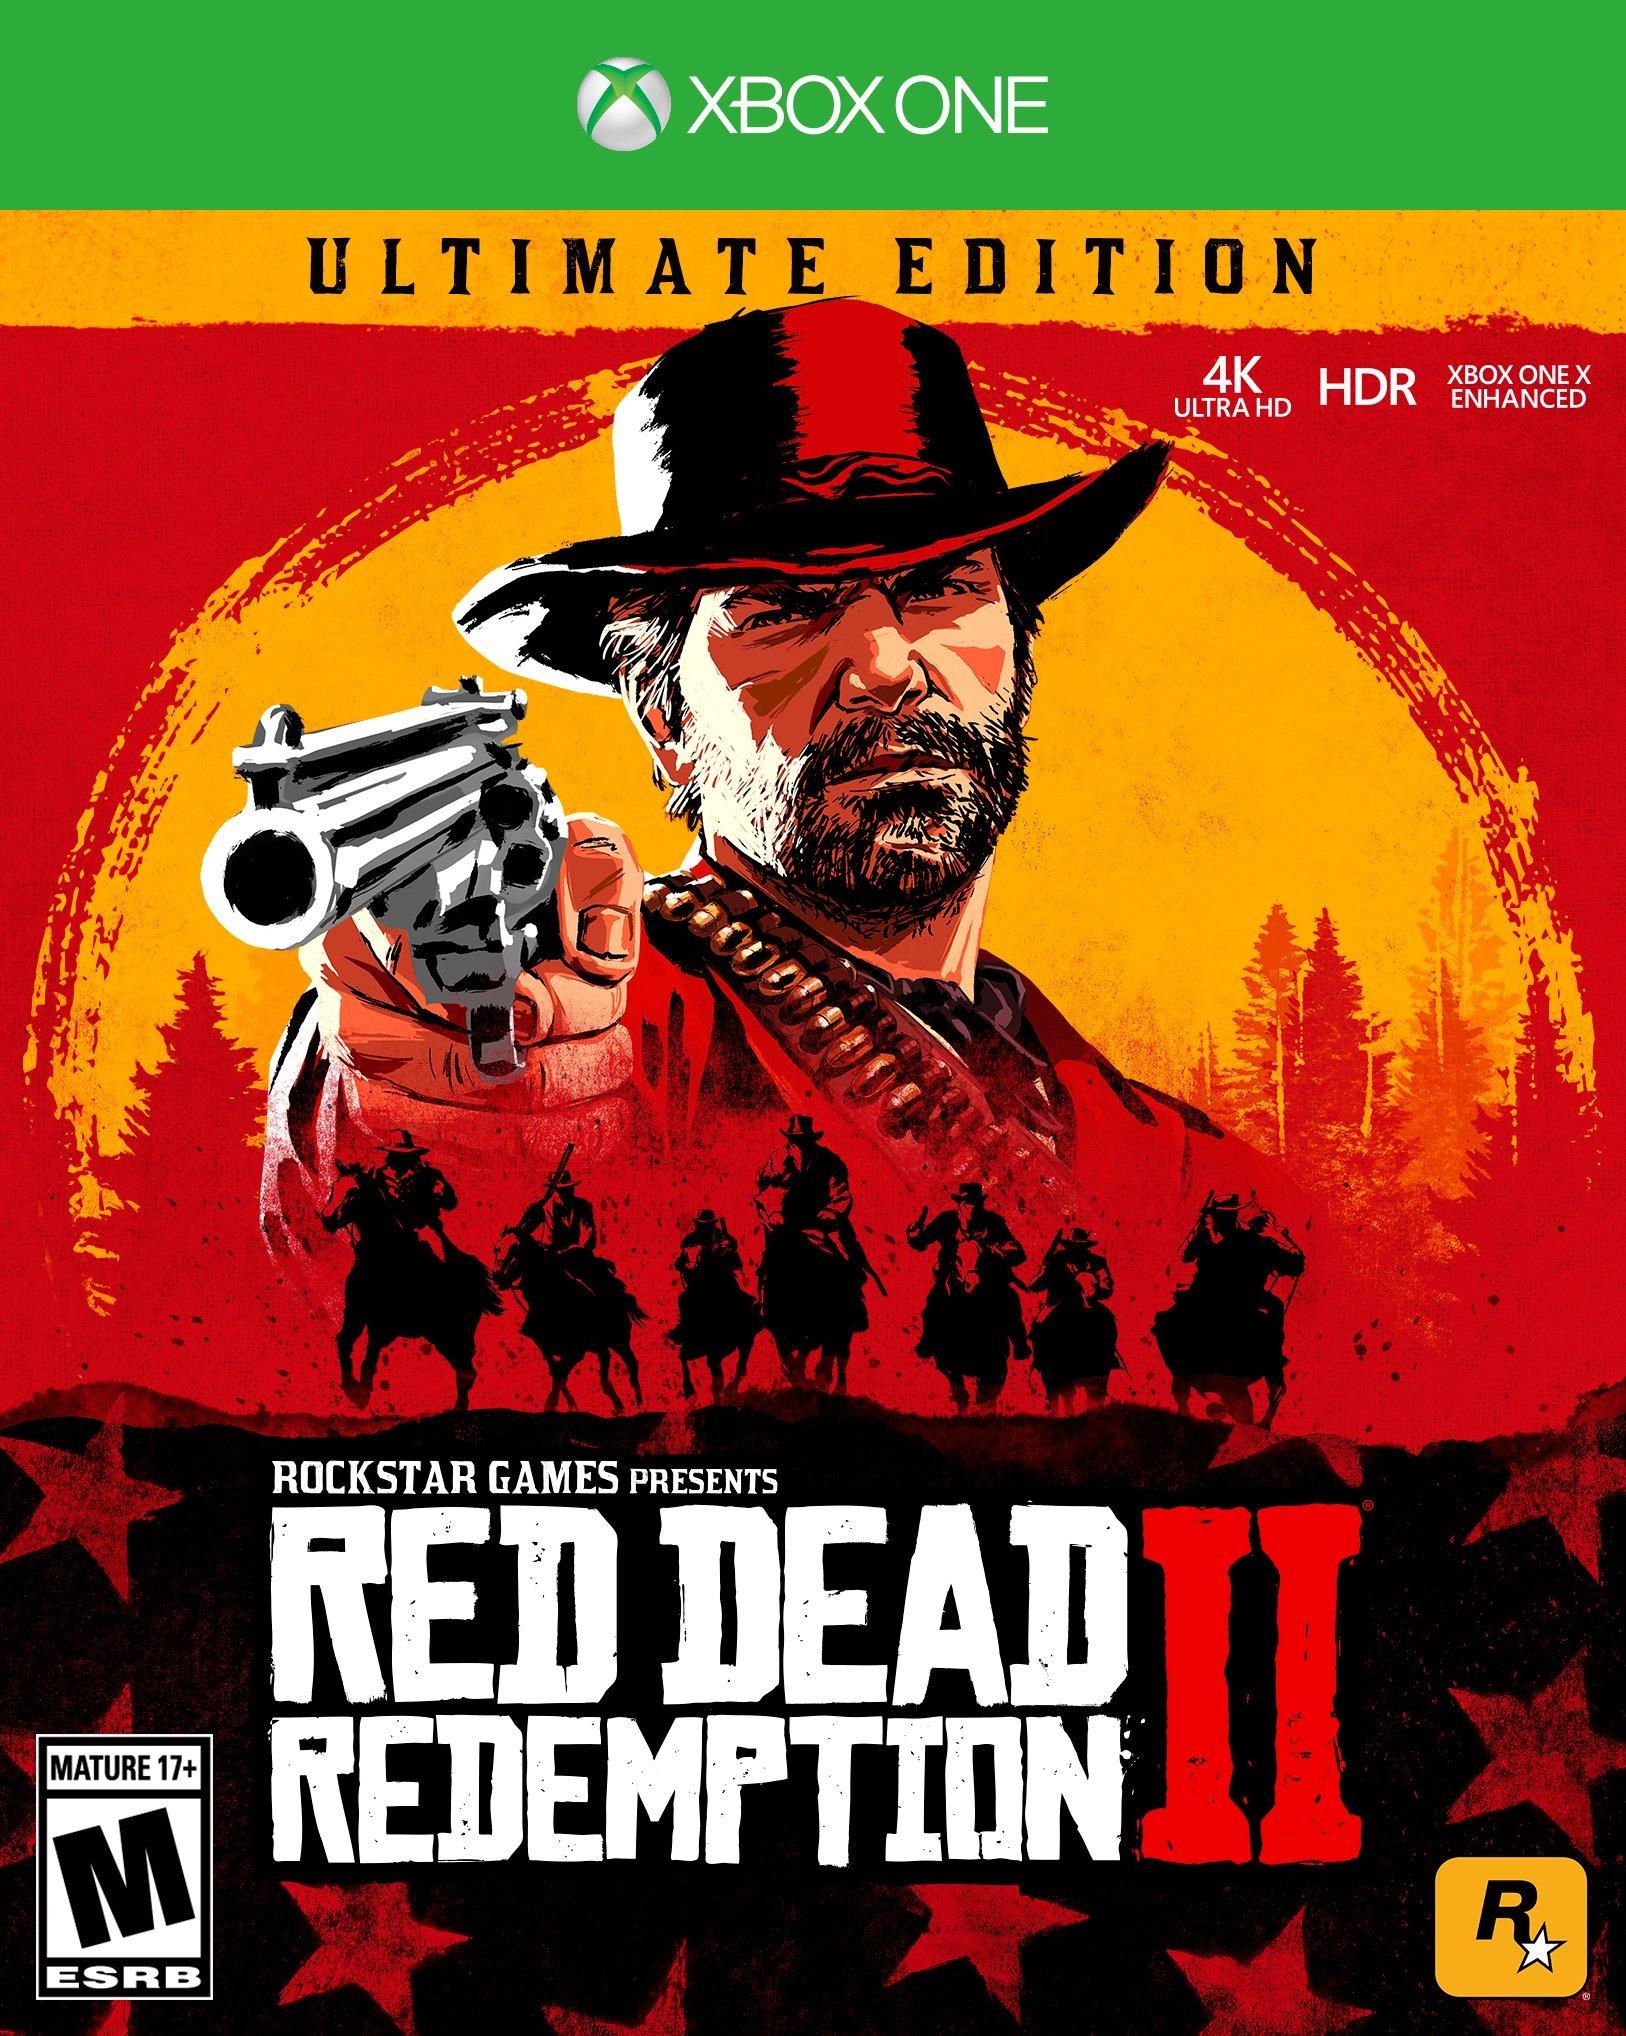 red dead redemption 2 ps4 best price